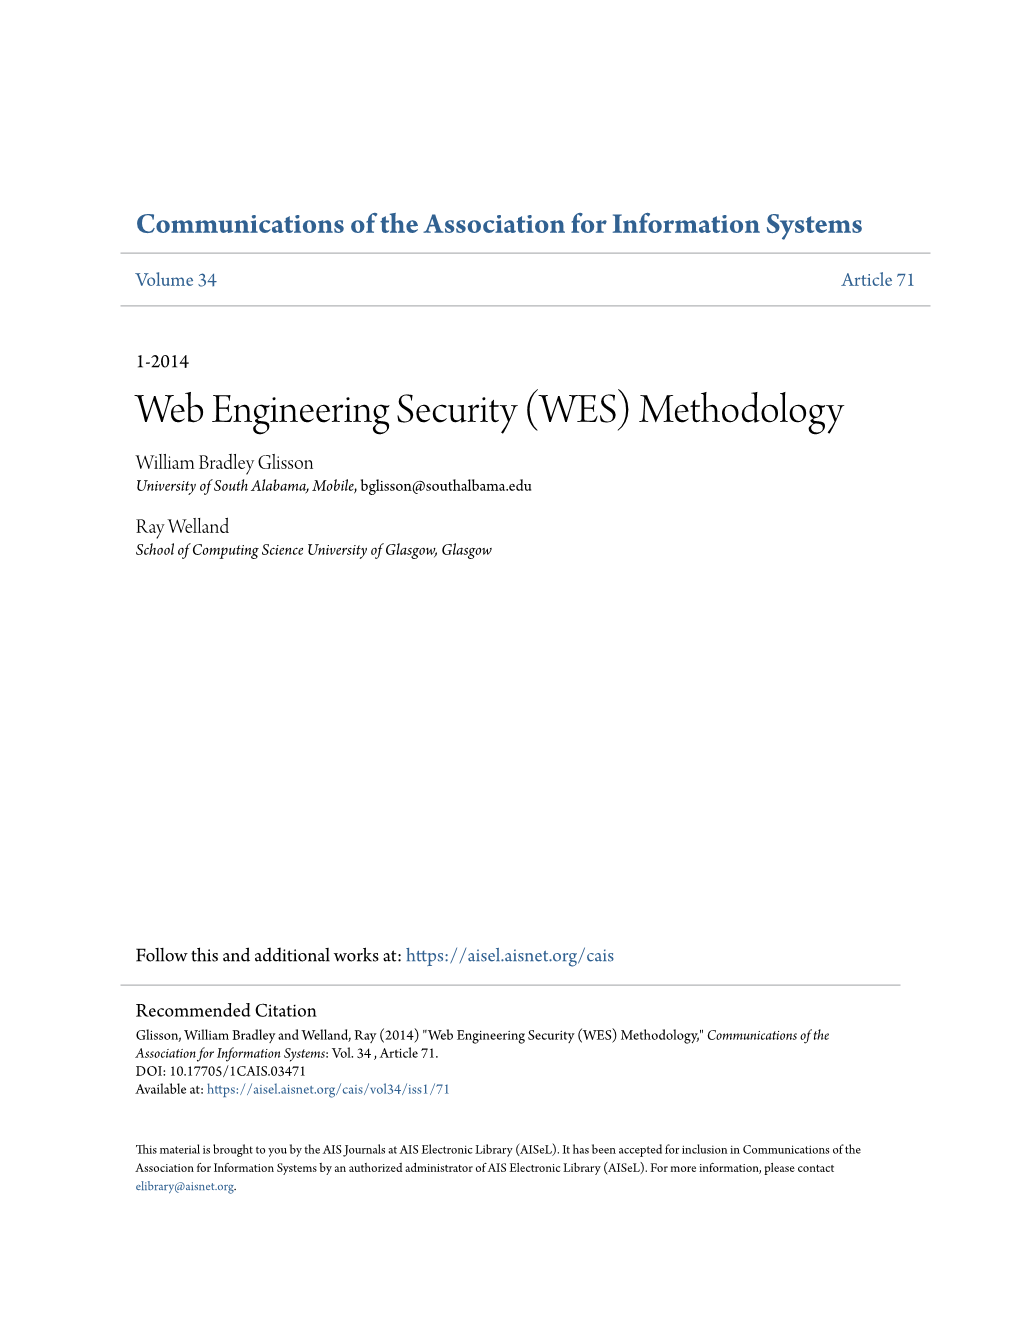 Web Engineering Security (WES) Methodology William Bradley Glisson University of South Alabama, Mobile, Bglisson@Southalbama.Edu